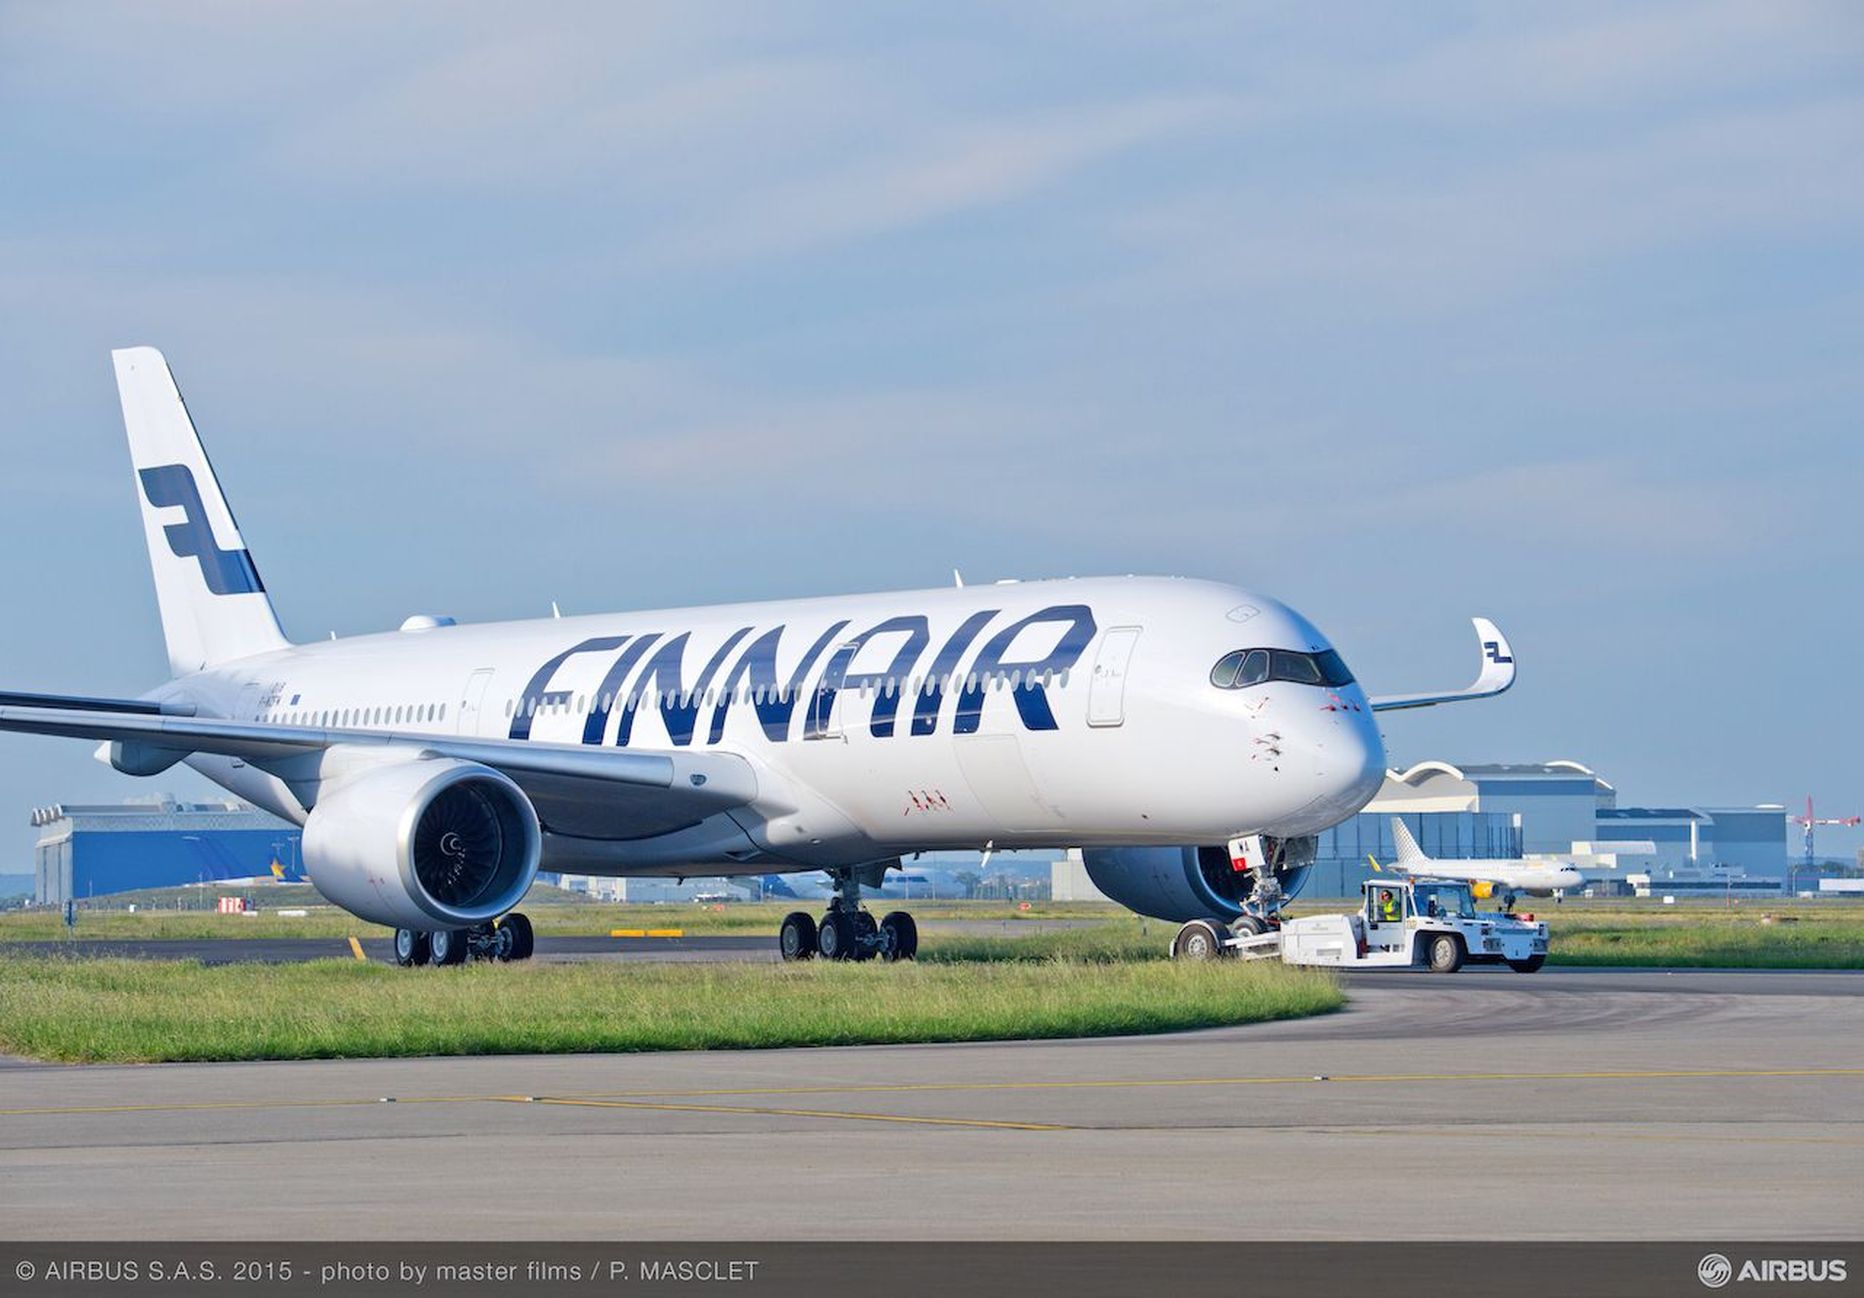 Finnairi uus lennuk.